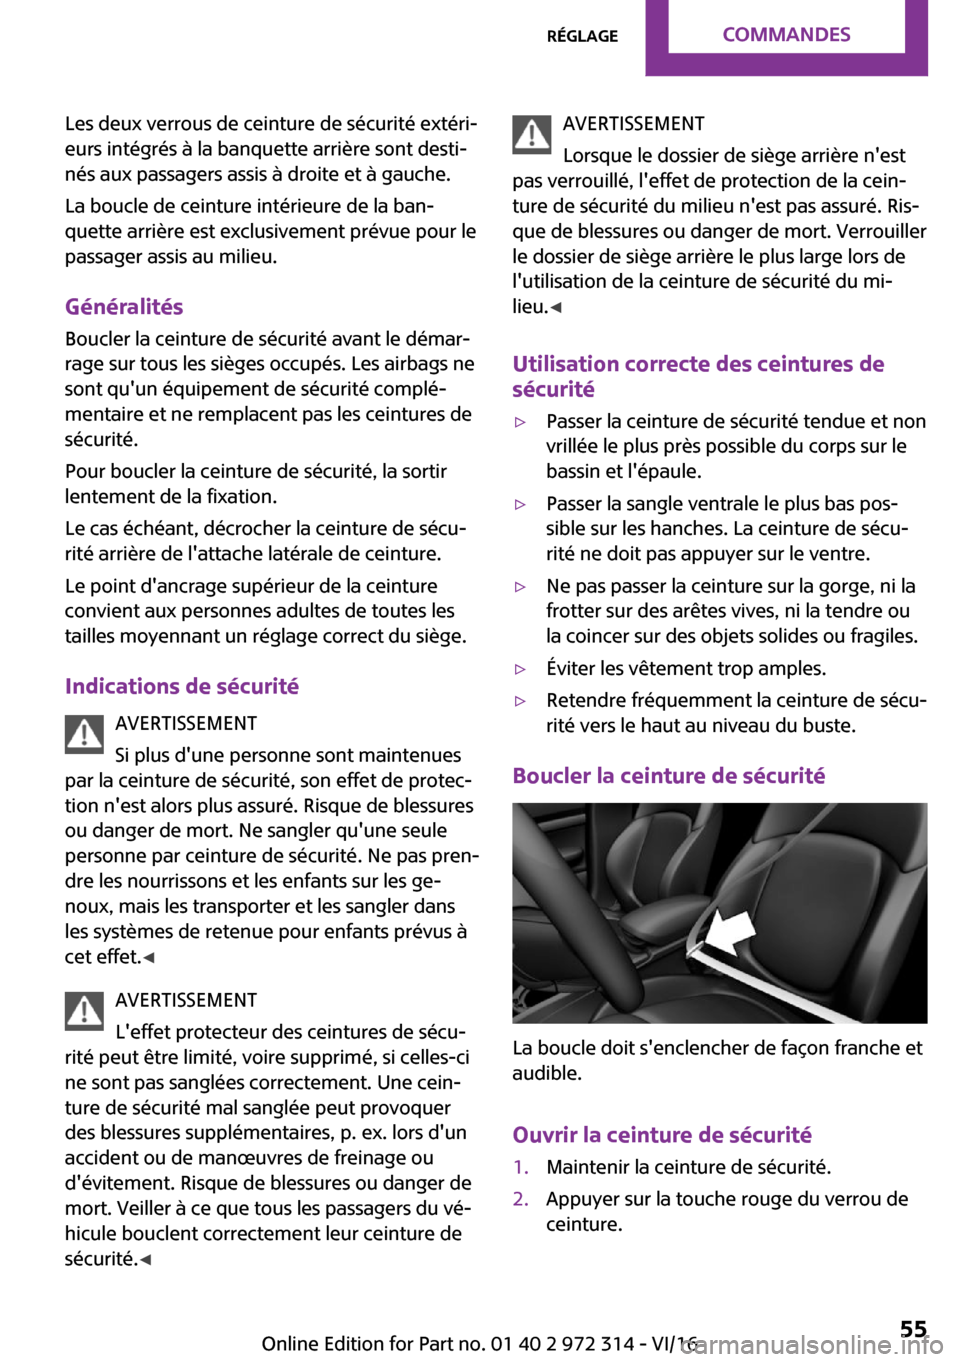 MINI 3 door 2016  Manuel du propriétaire (in French) �L�e�s� �d�e�u�x� �v�e�r�r�o�u�s� �d�e� �c�e�i�n�t�u�r�e� �d�e� �s�é�c�u�r�i�t�é� �e�x�t�é�r�i~
�e�u�r�s� �i�n�t�é�g�r�é�s� �